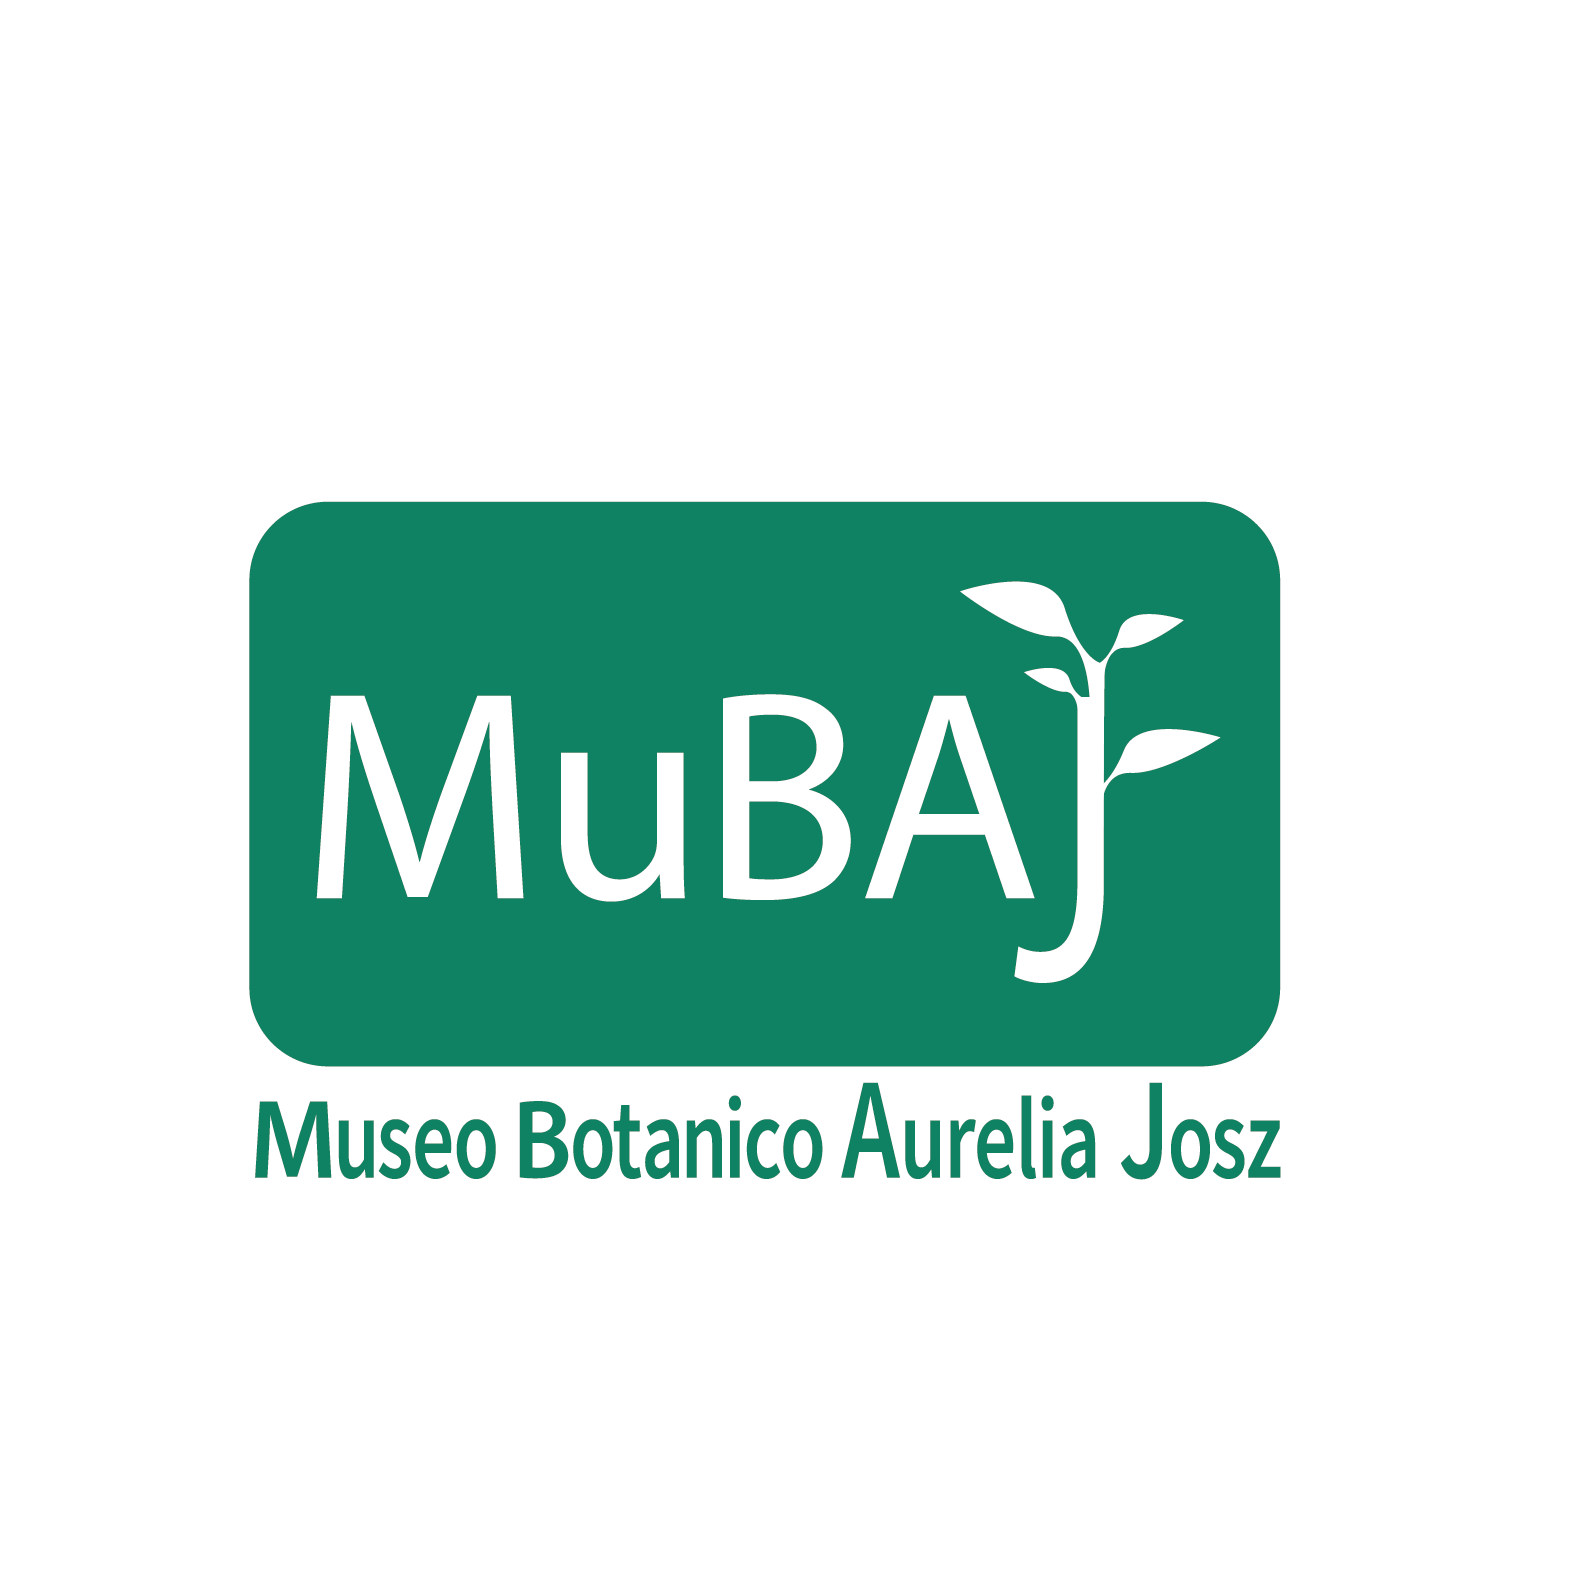 Le iniziative del 17 dicembre al Museo Botanico Aurelia Josz